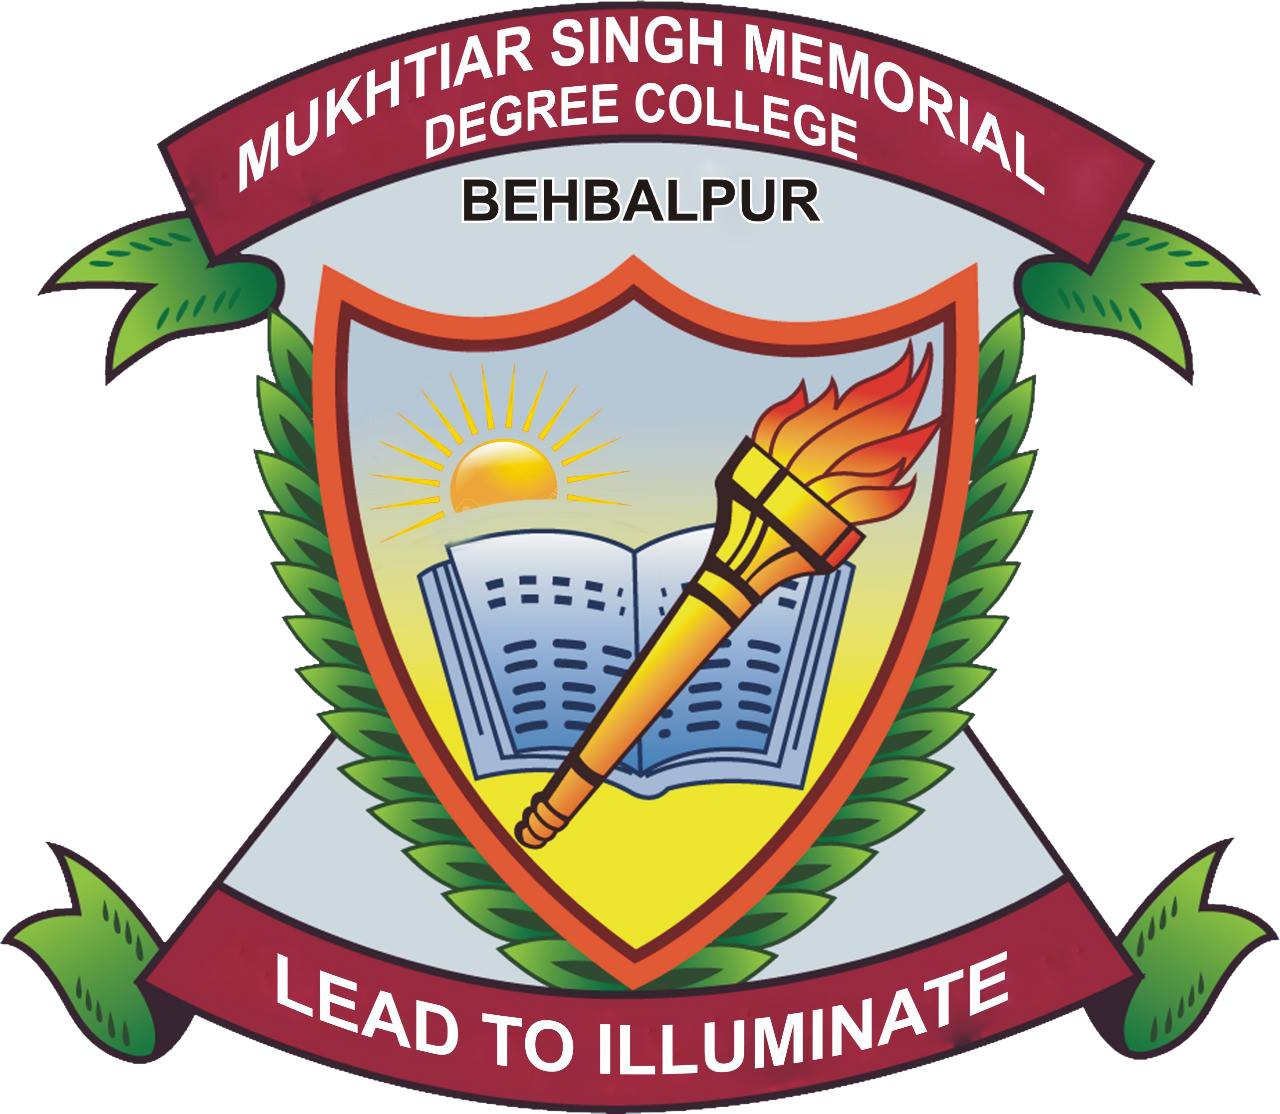 Mukhtiar Singh Memorial Degree College - Logo